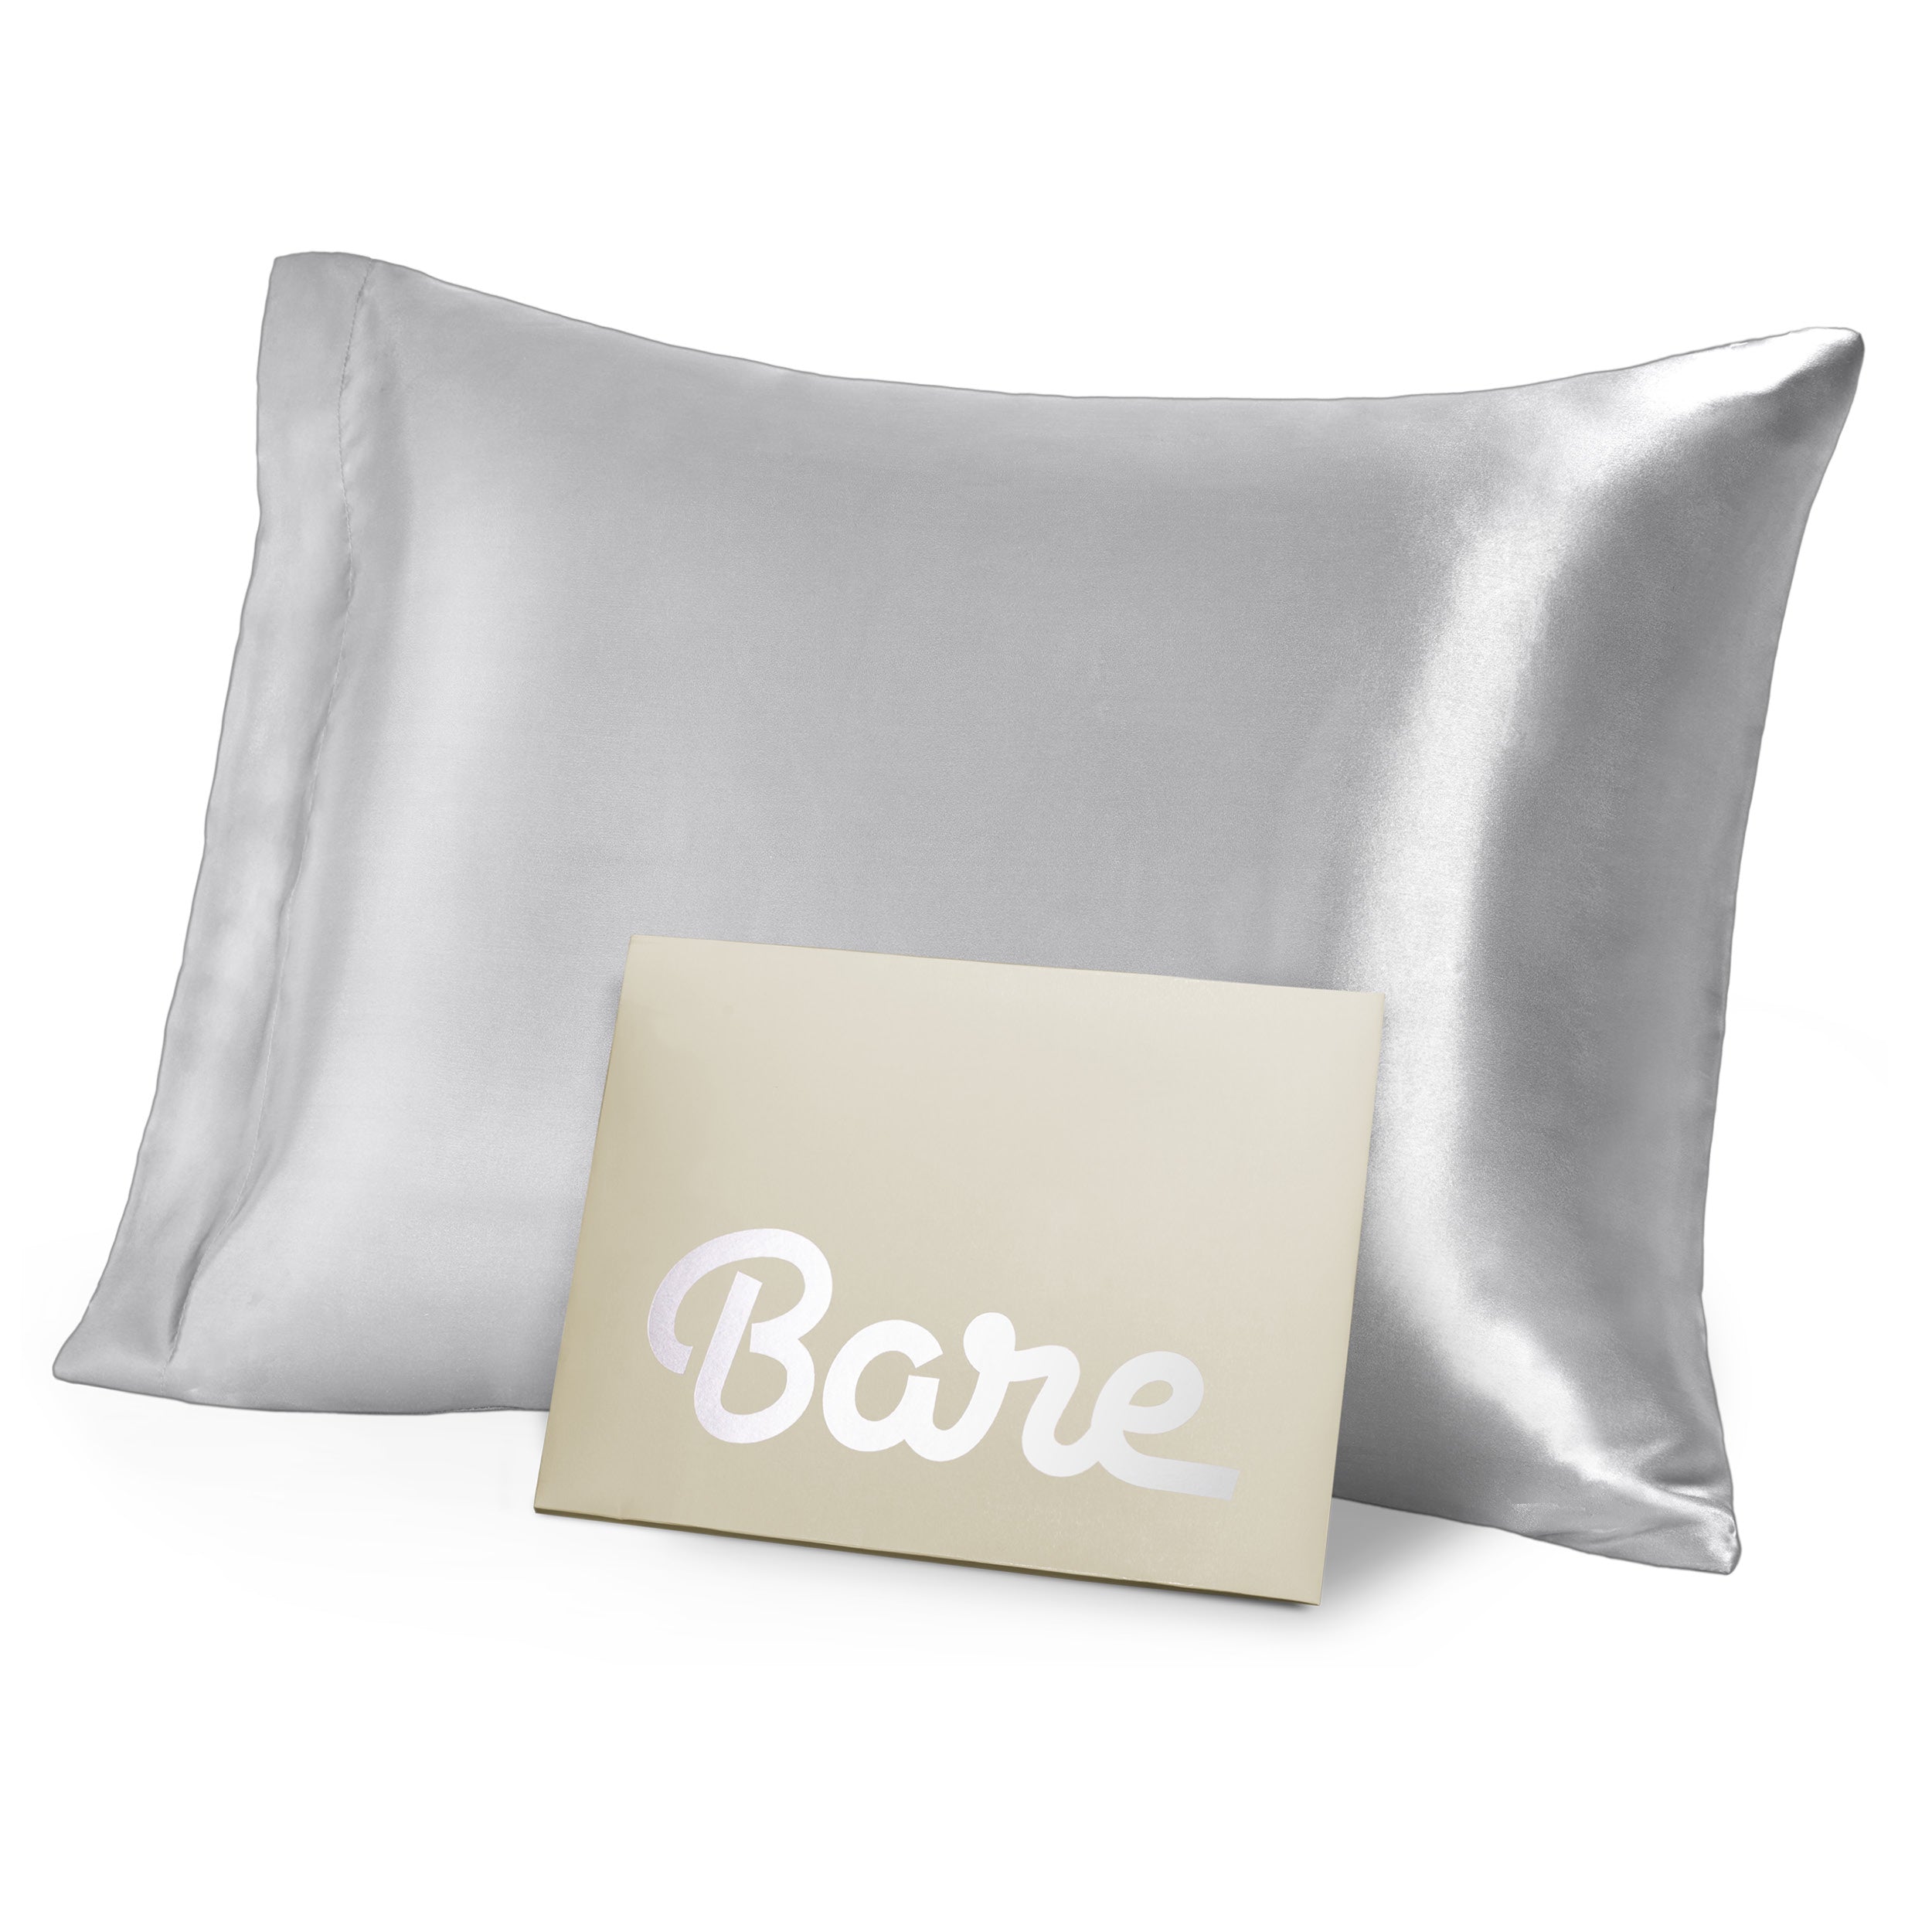 A silver mulberry silk pillowcase on a pillow